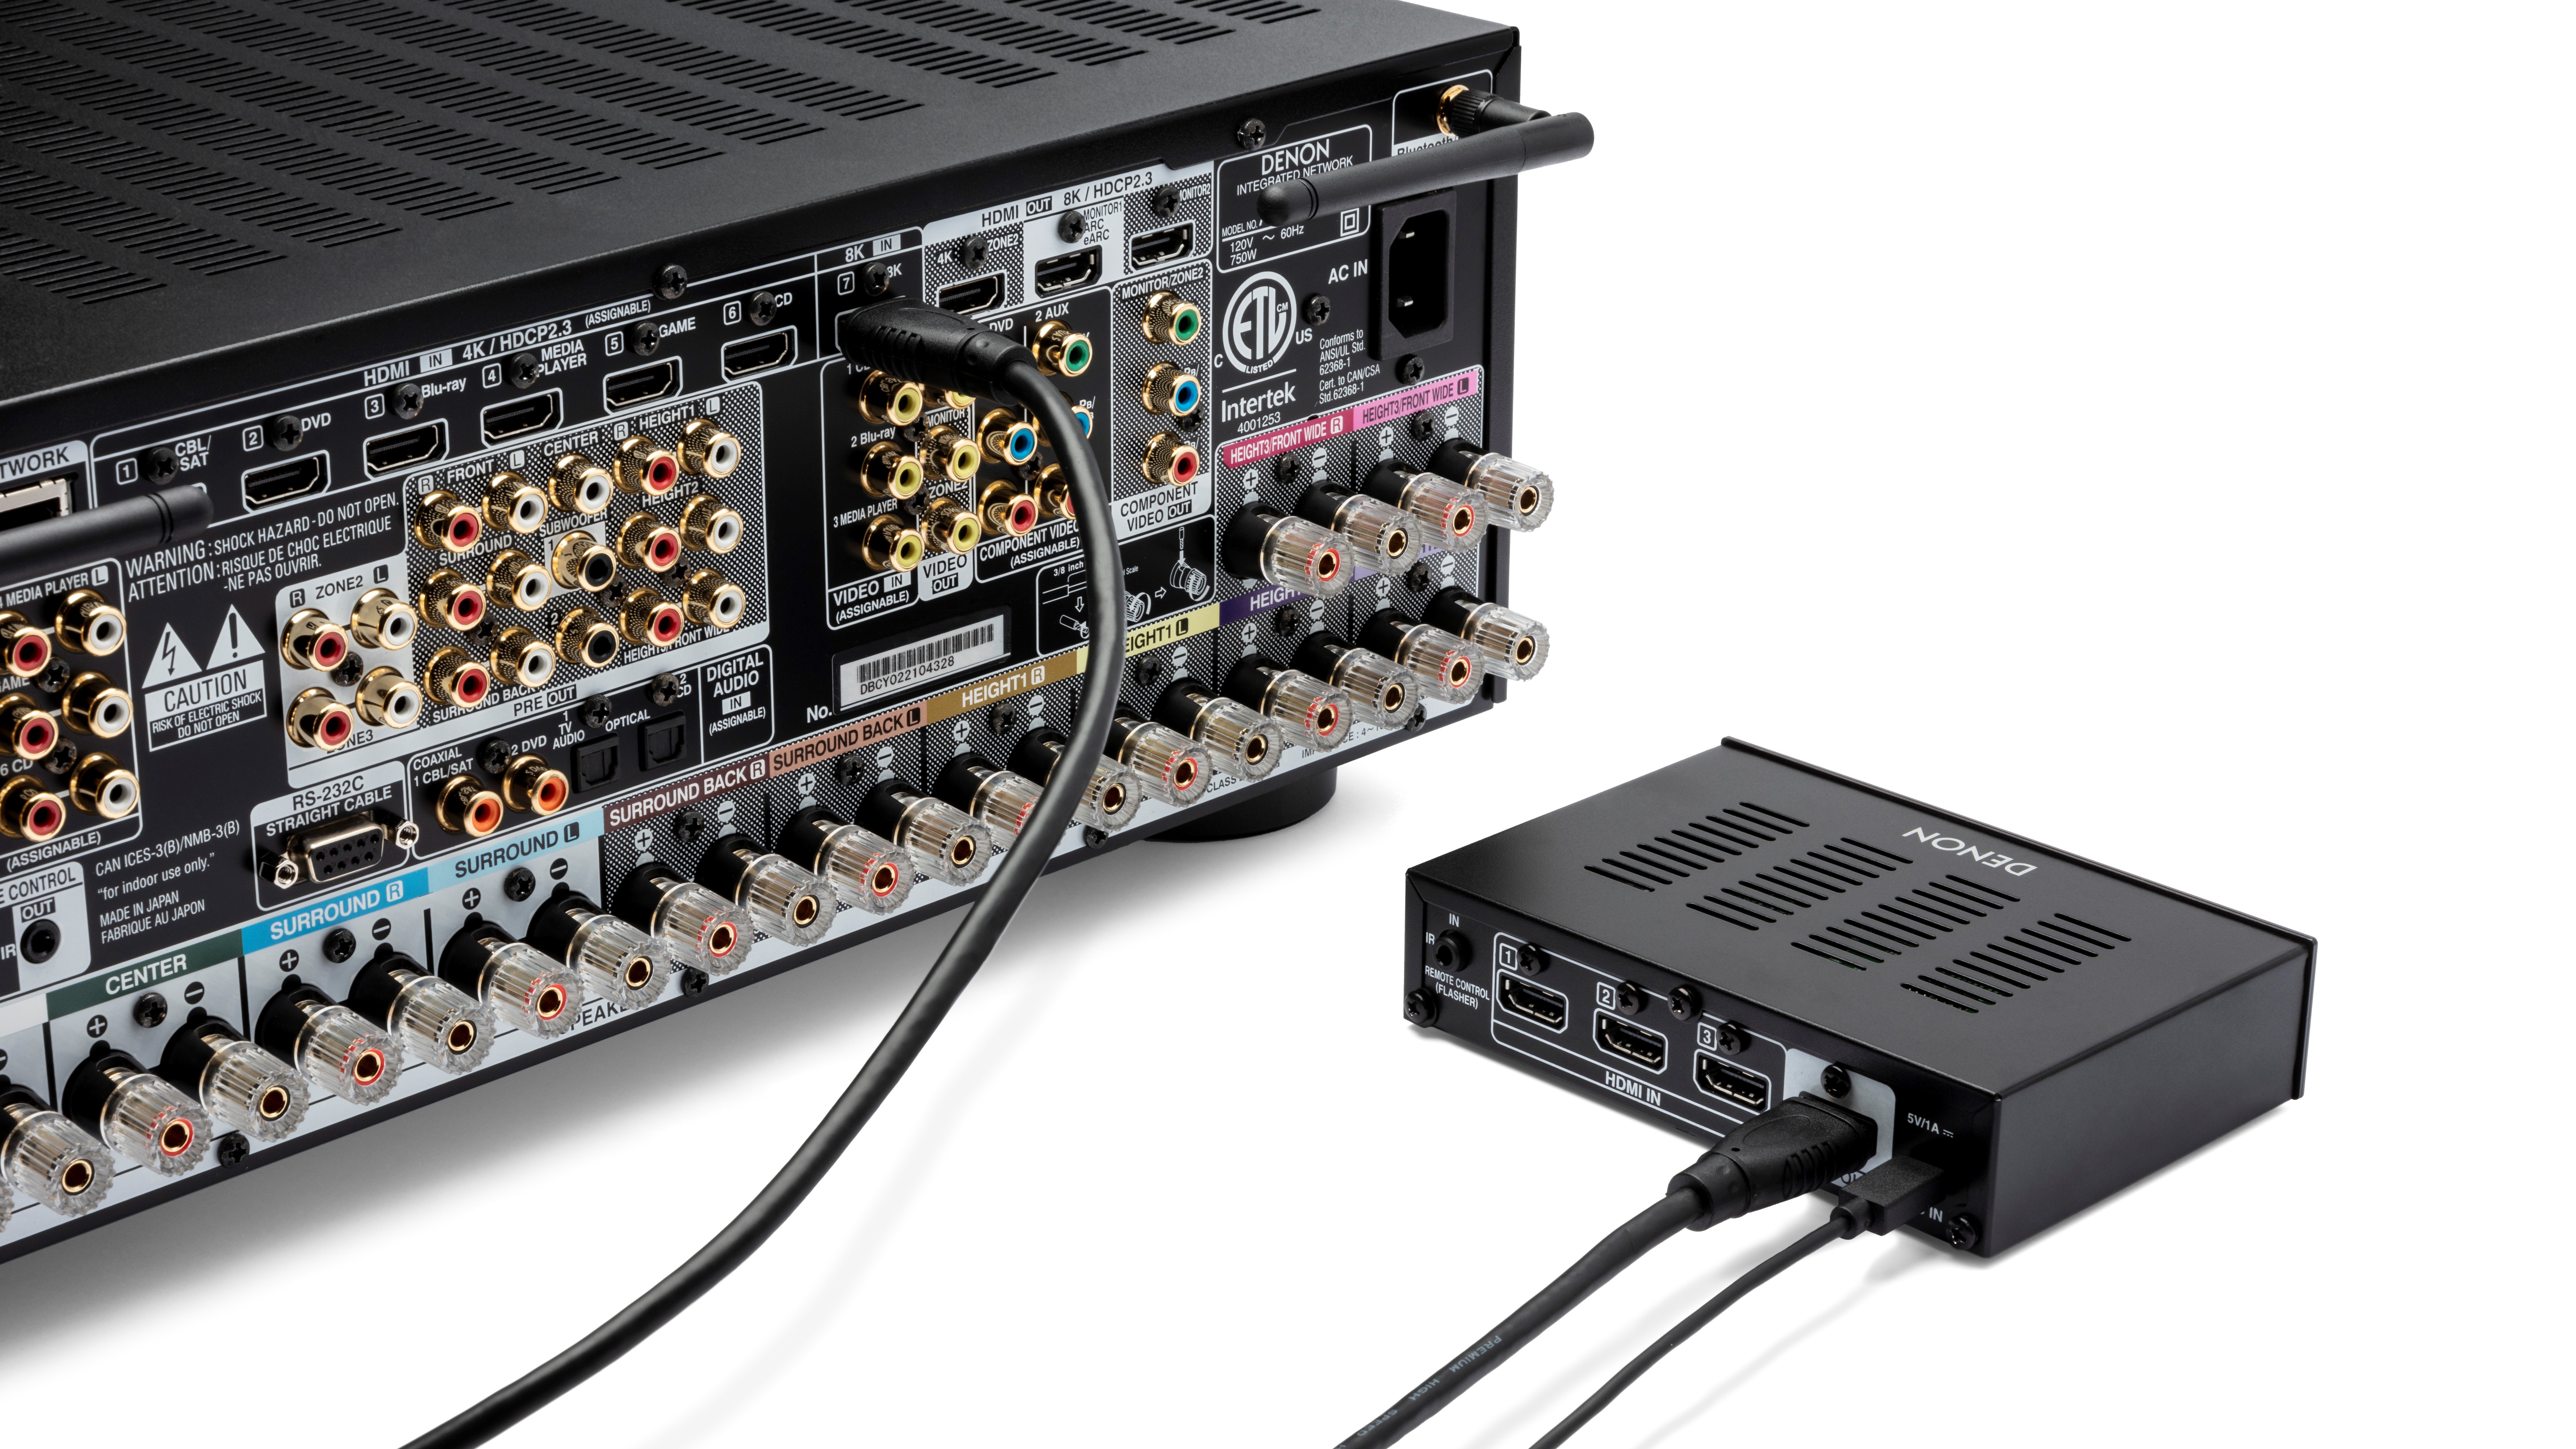 Denon and Marantz introduce 8K 2.1 upgrade for AV receivers | What Hi-Fi?